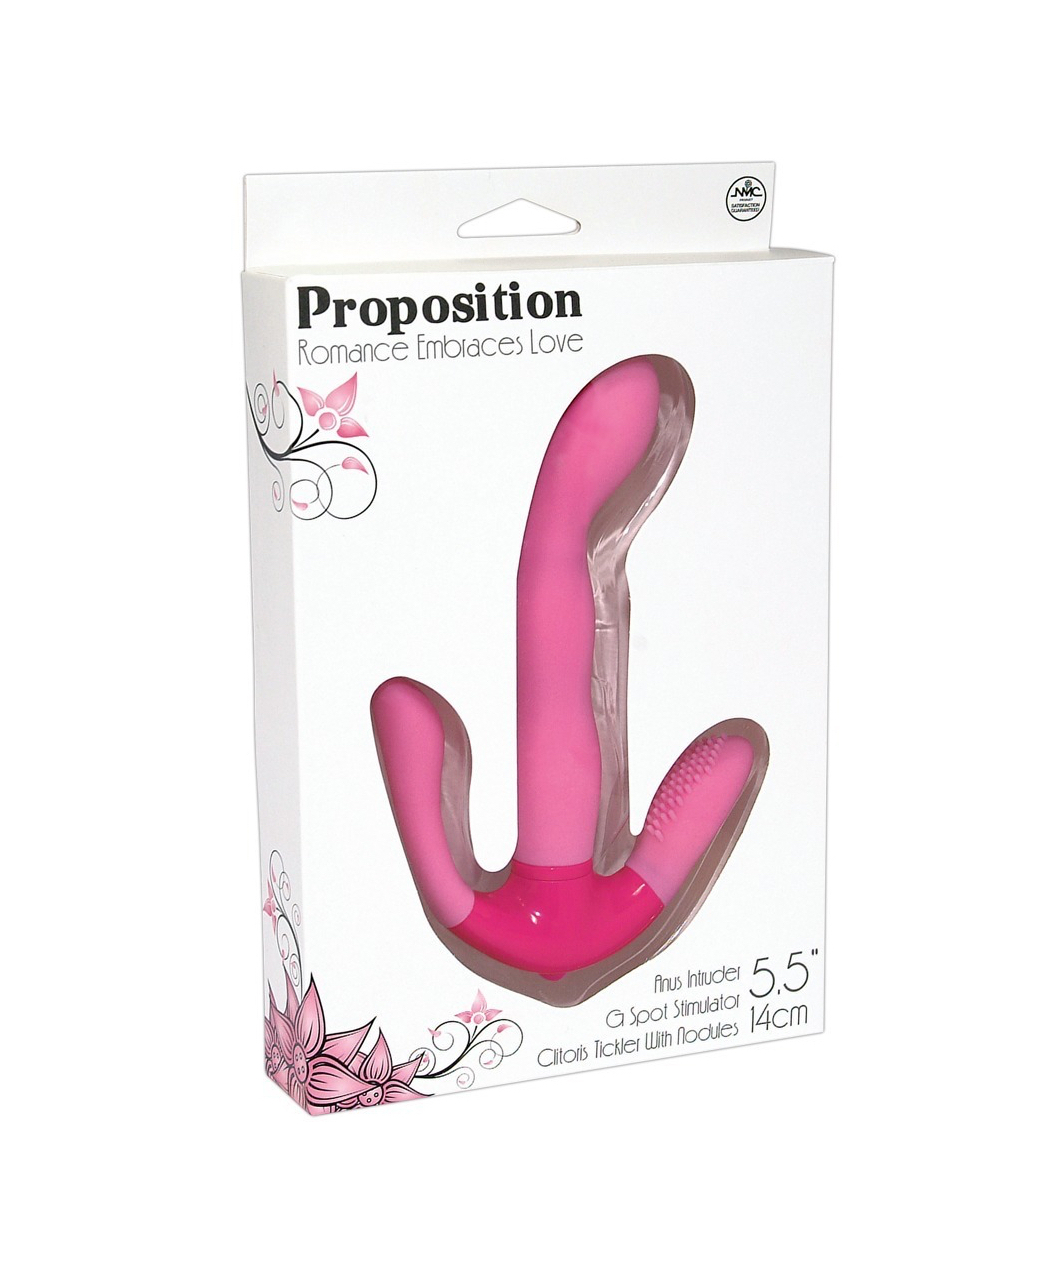 NMC Proposition vibrators